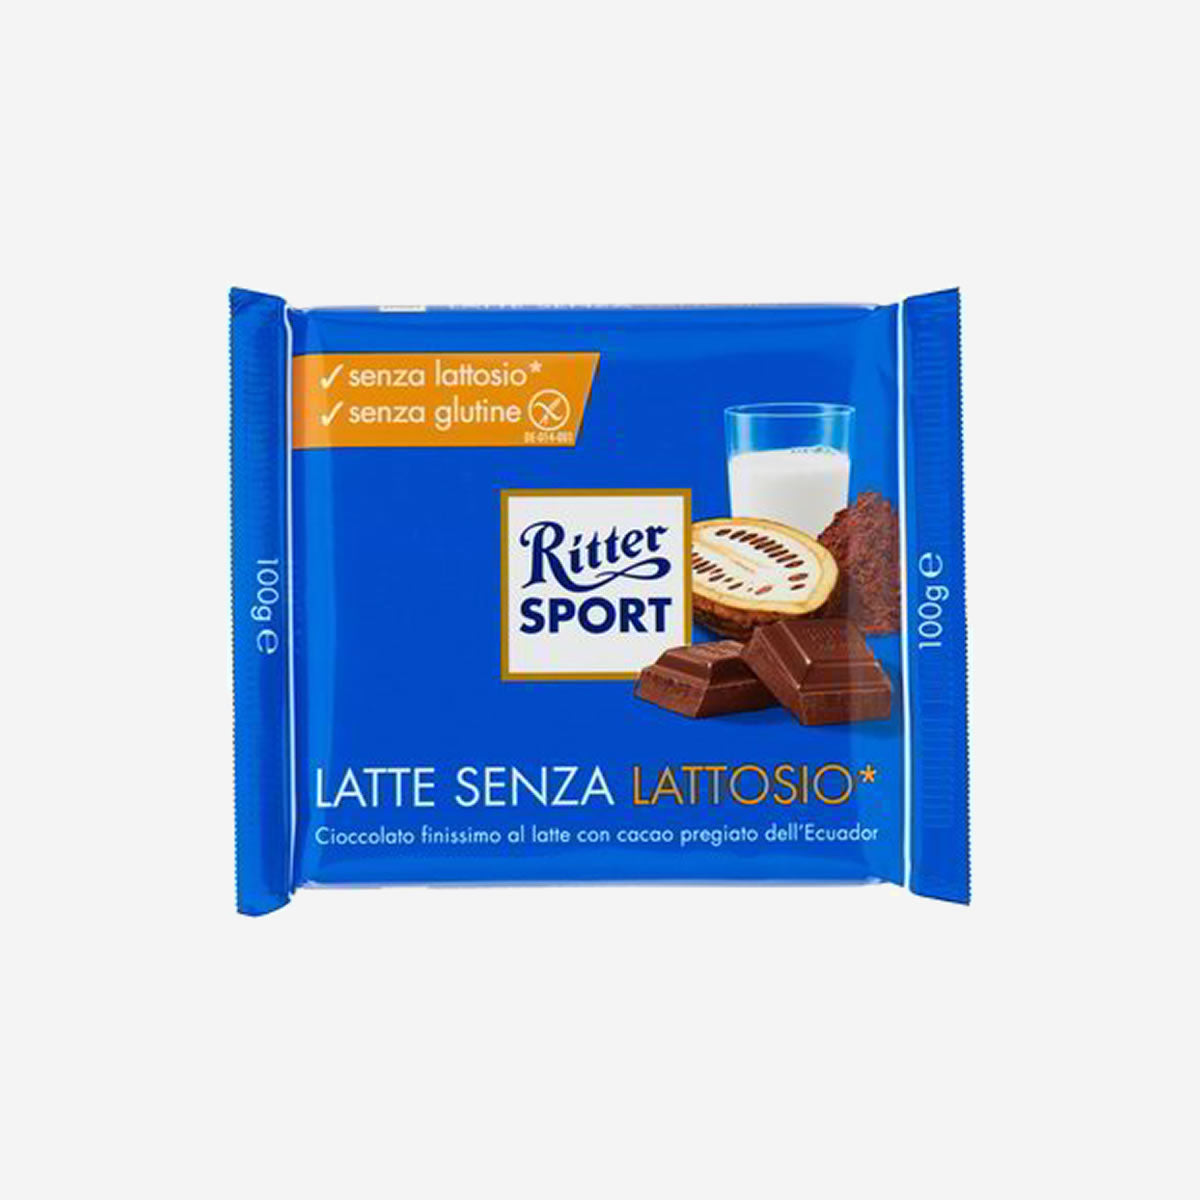 Ritter Sport Latte senza Lattosio – Chocolate Shop